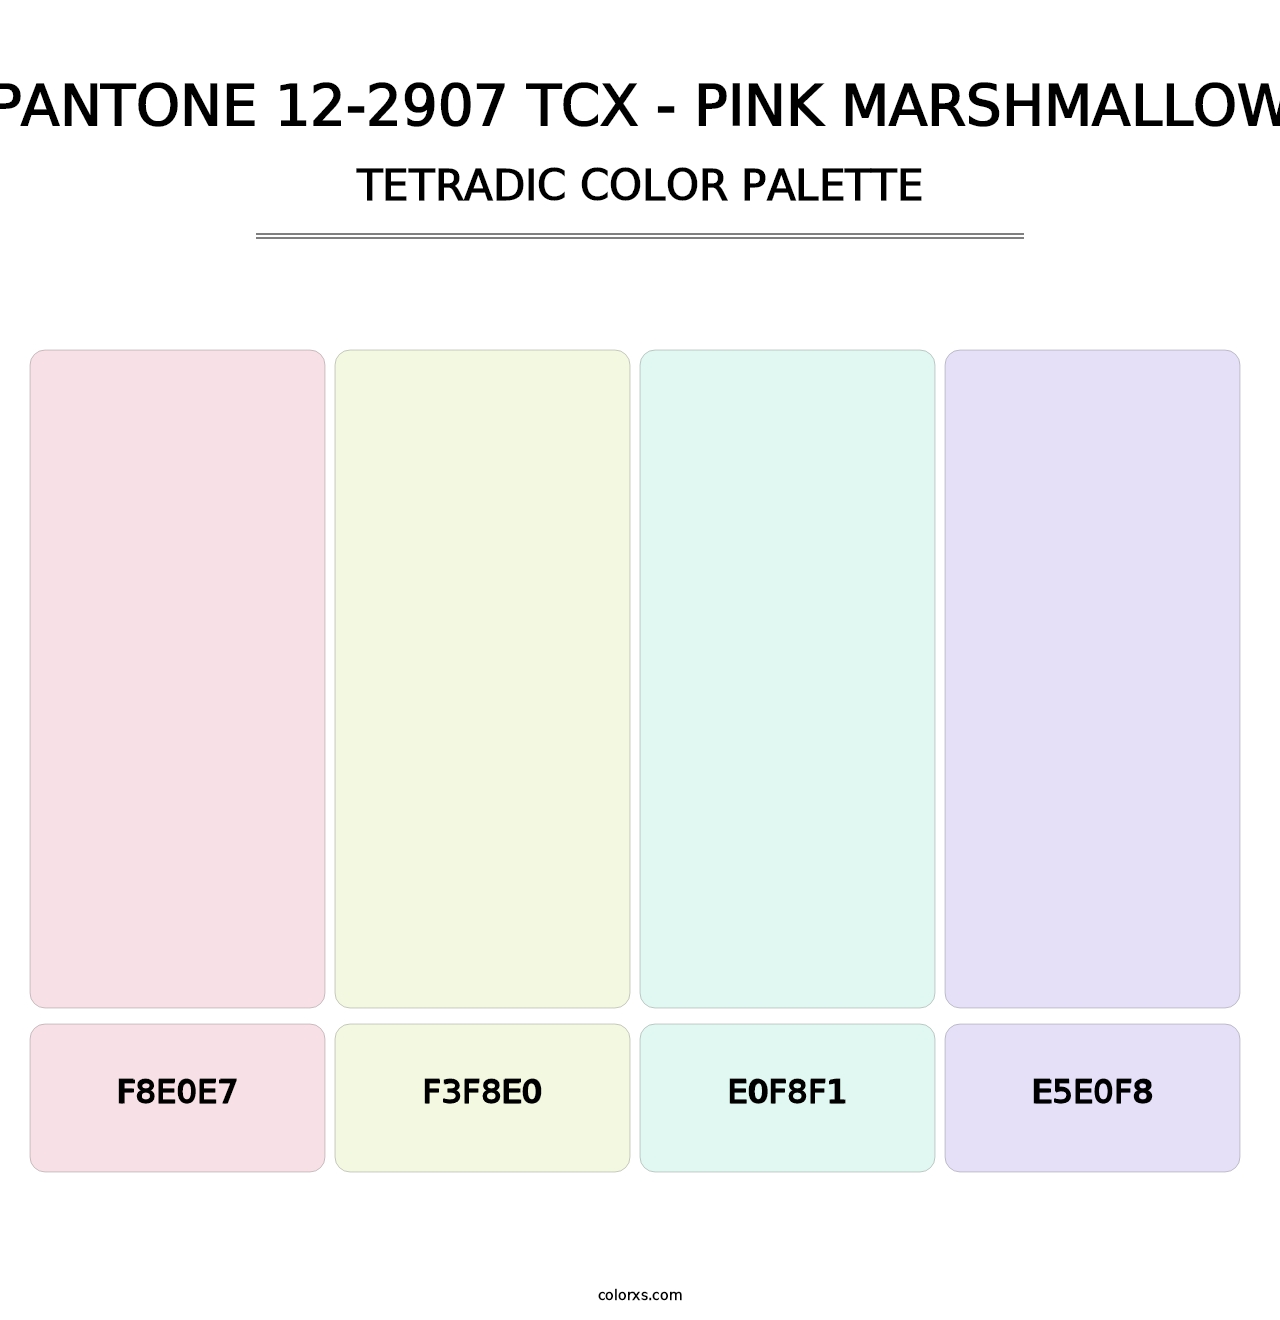 PANTONE 12-2907 TCX - Pink Marshmallow - Tetradic Color Palette